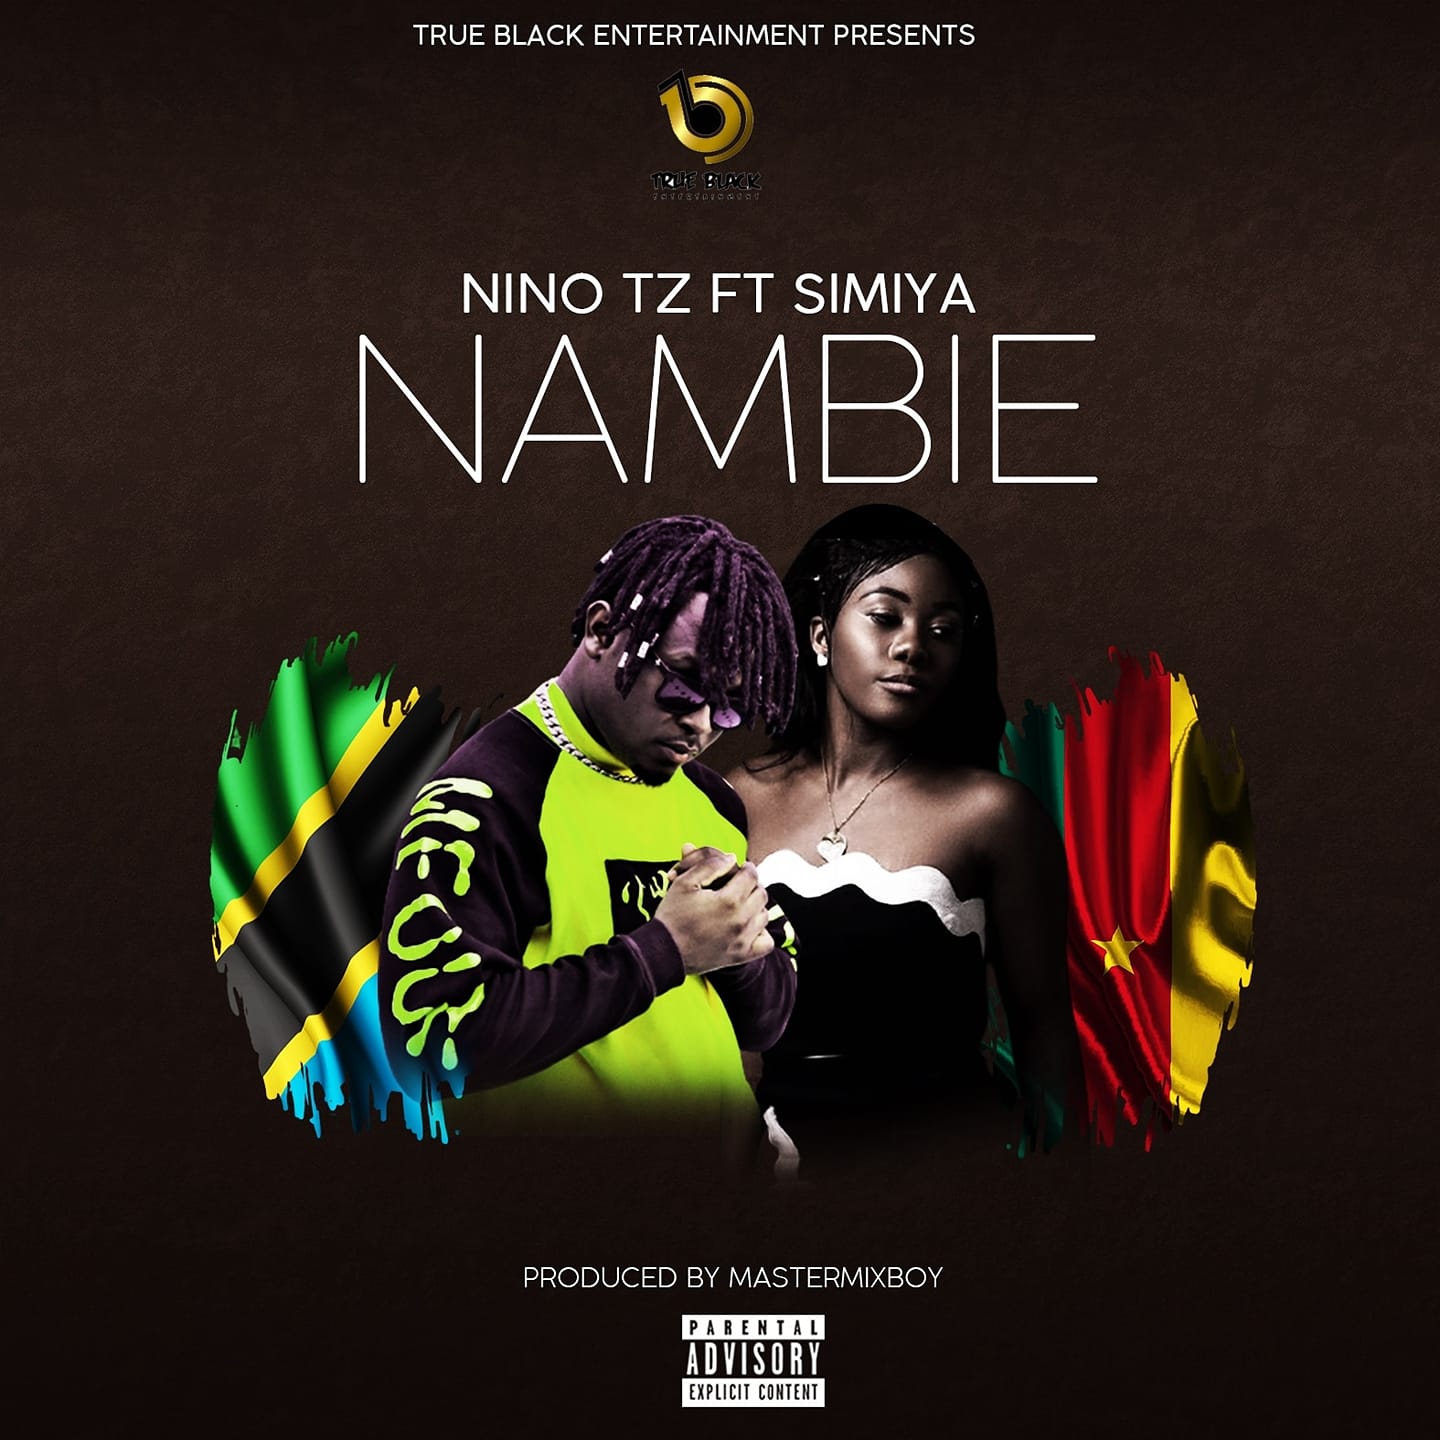 "Nambie" - Nino Tz x Simiya